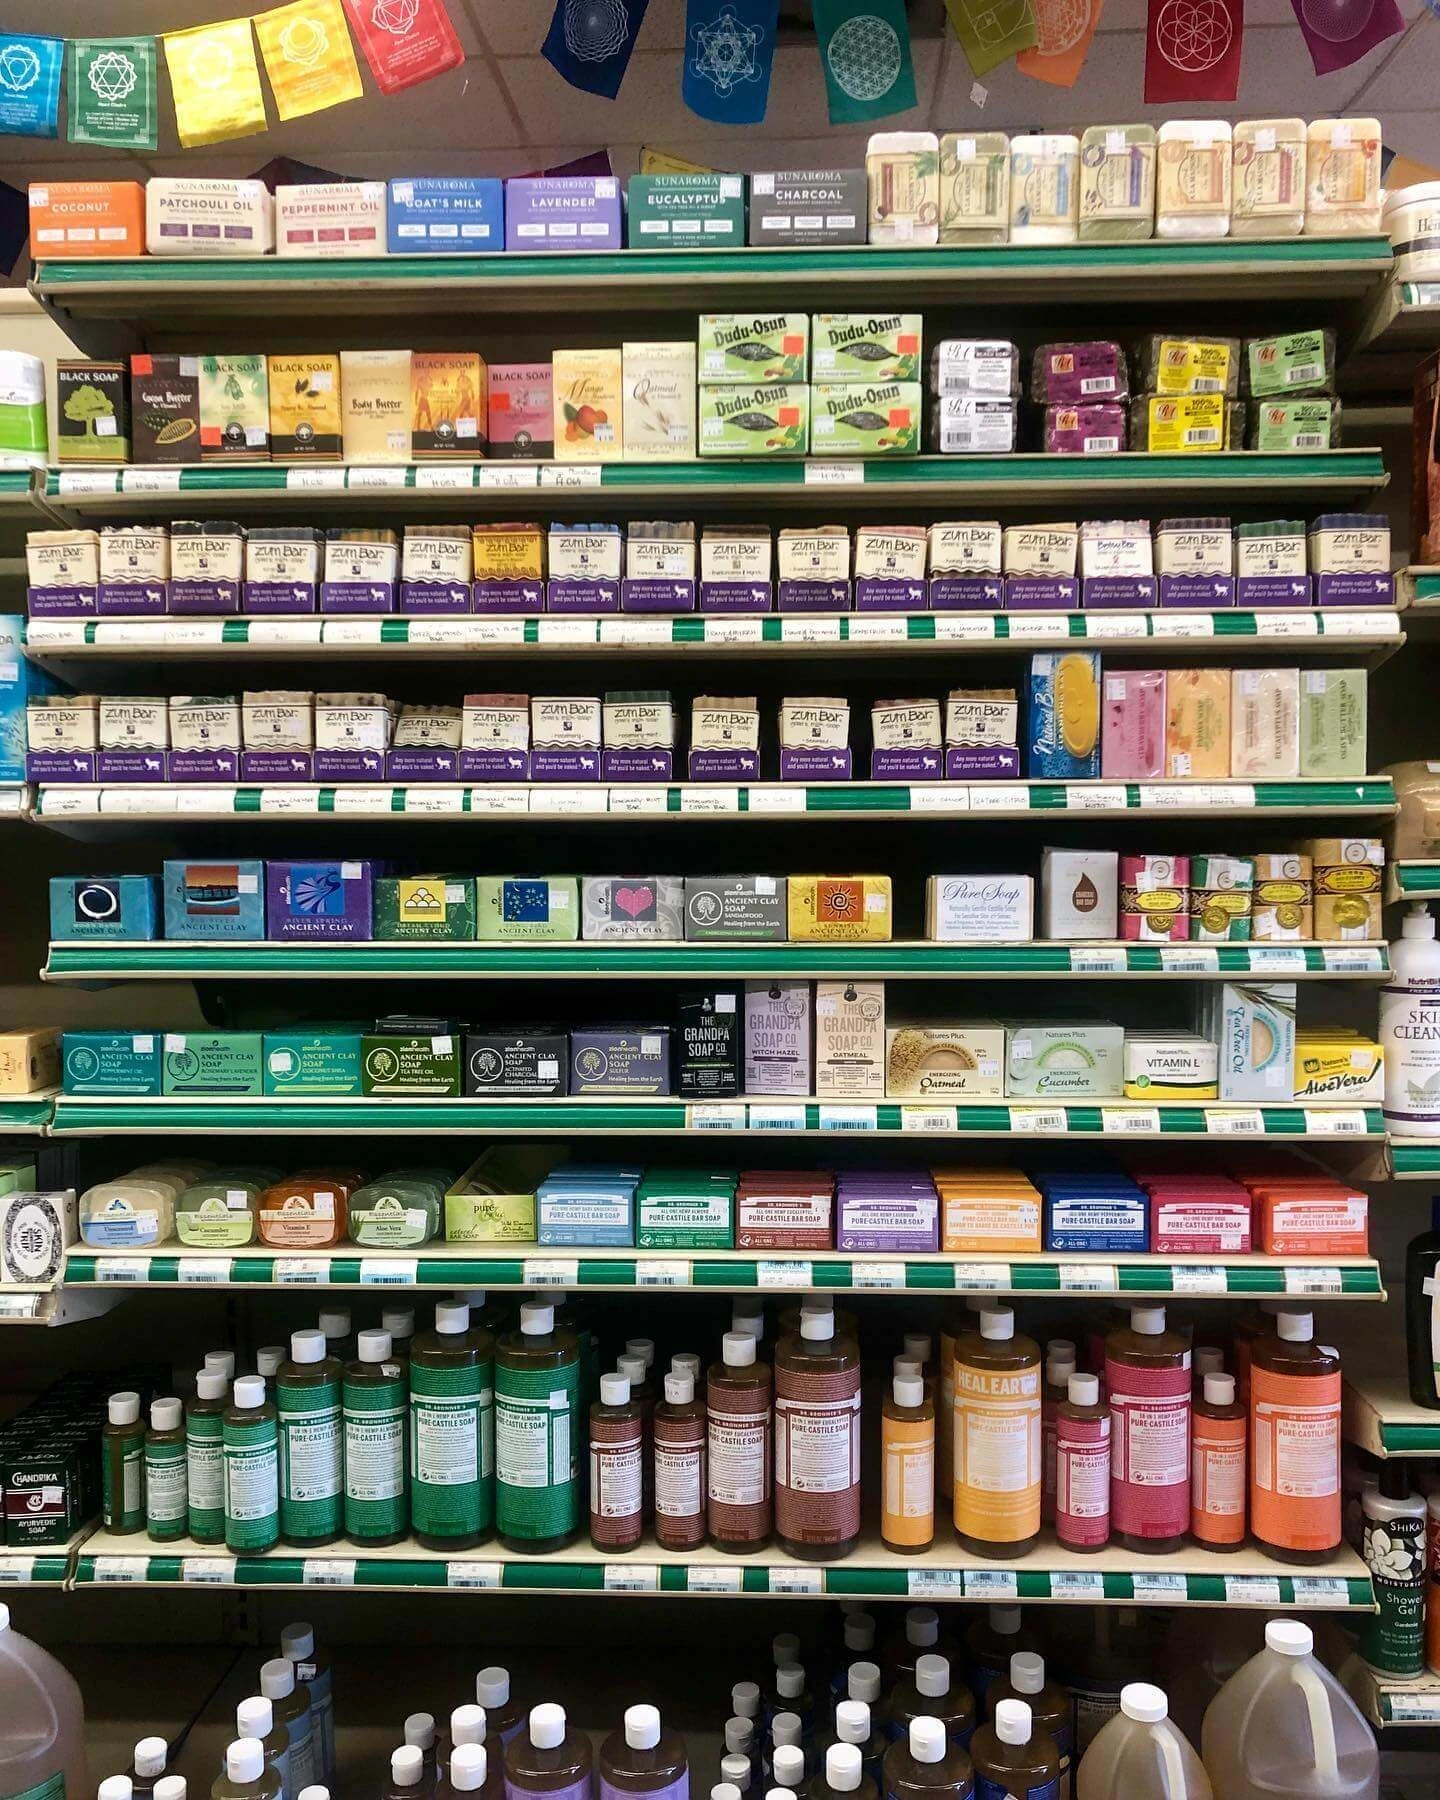 A shelf of natural soaps